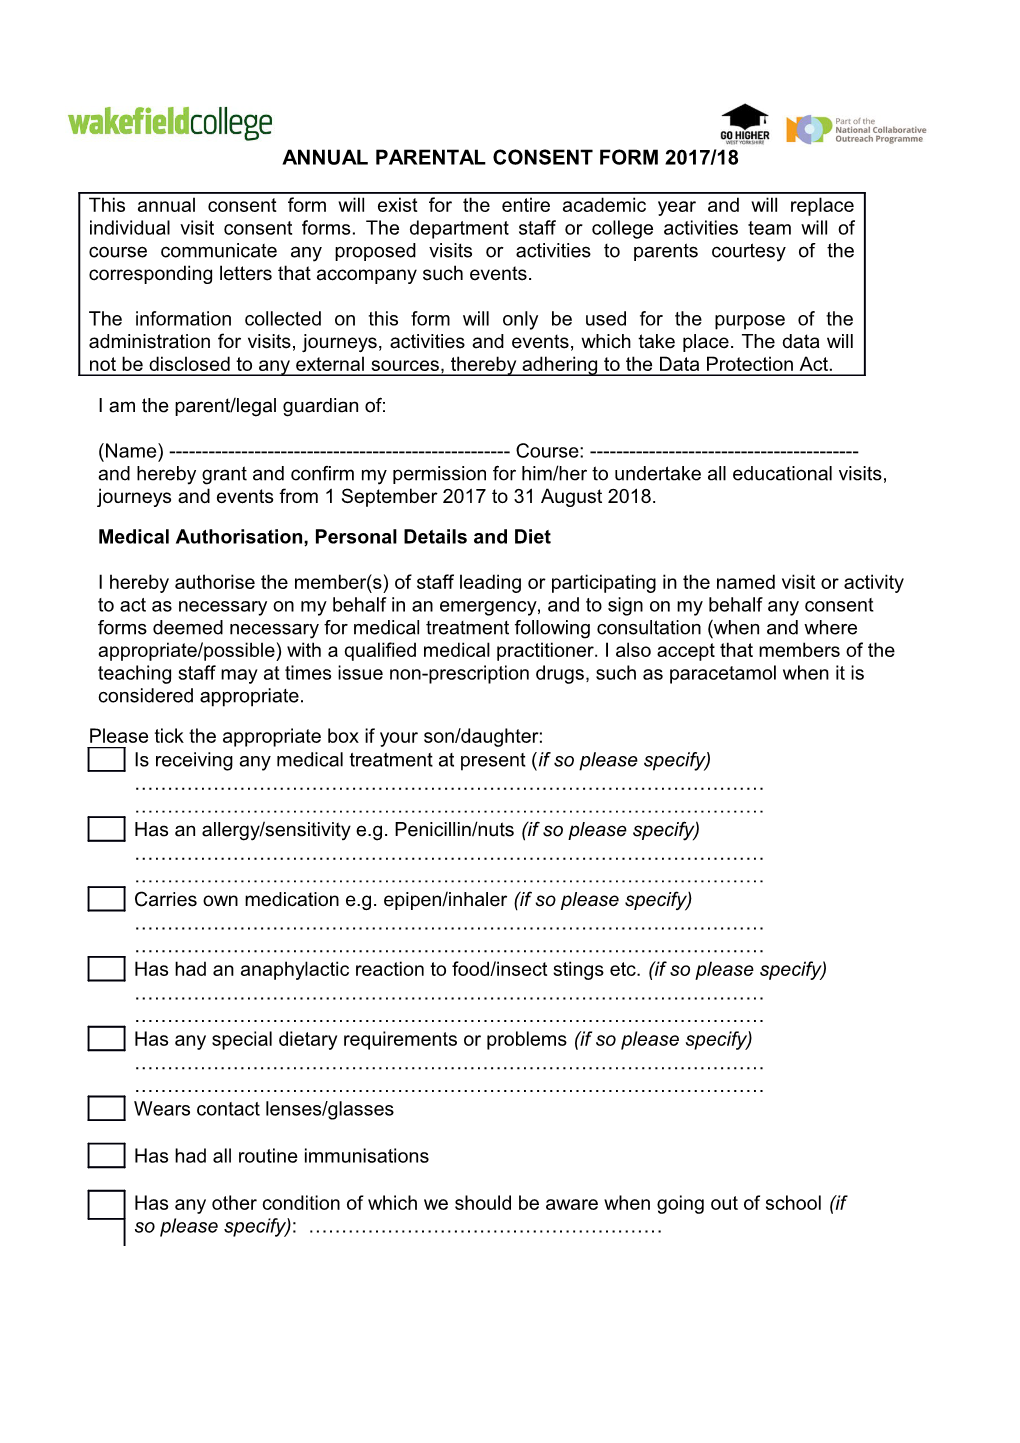 Annual Parental Consent Form 2017/18